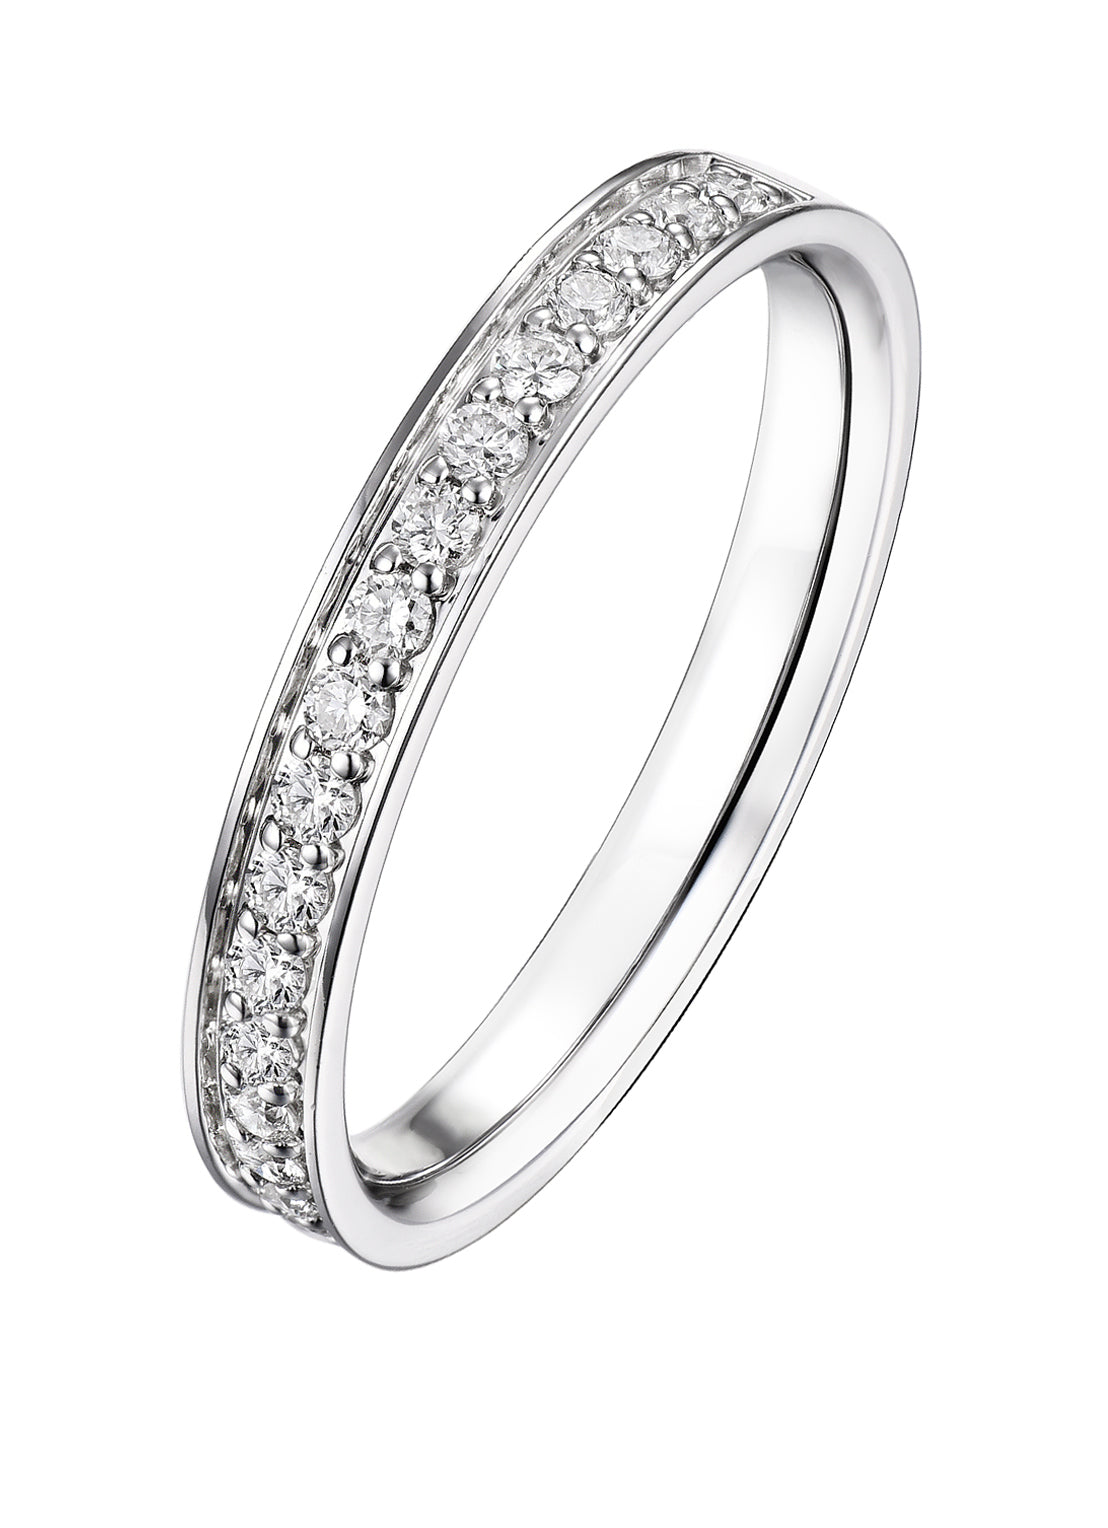 White gold ring, 0.27 ct diamond, wedding